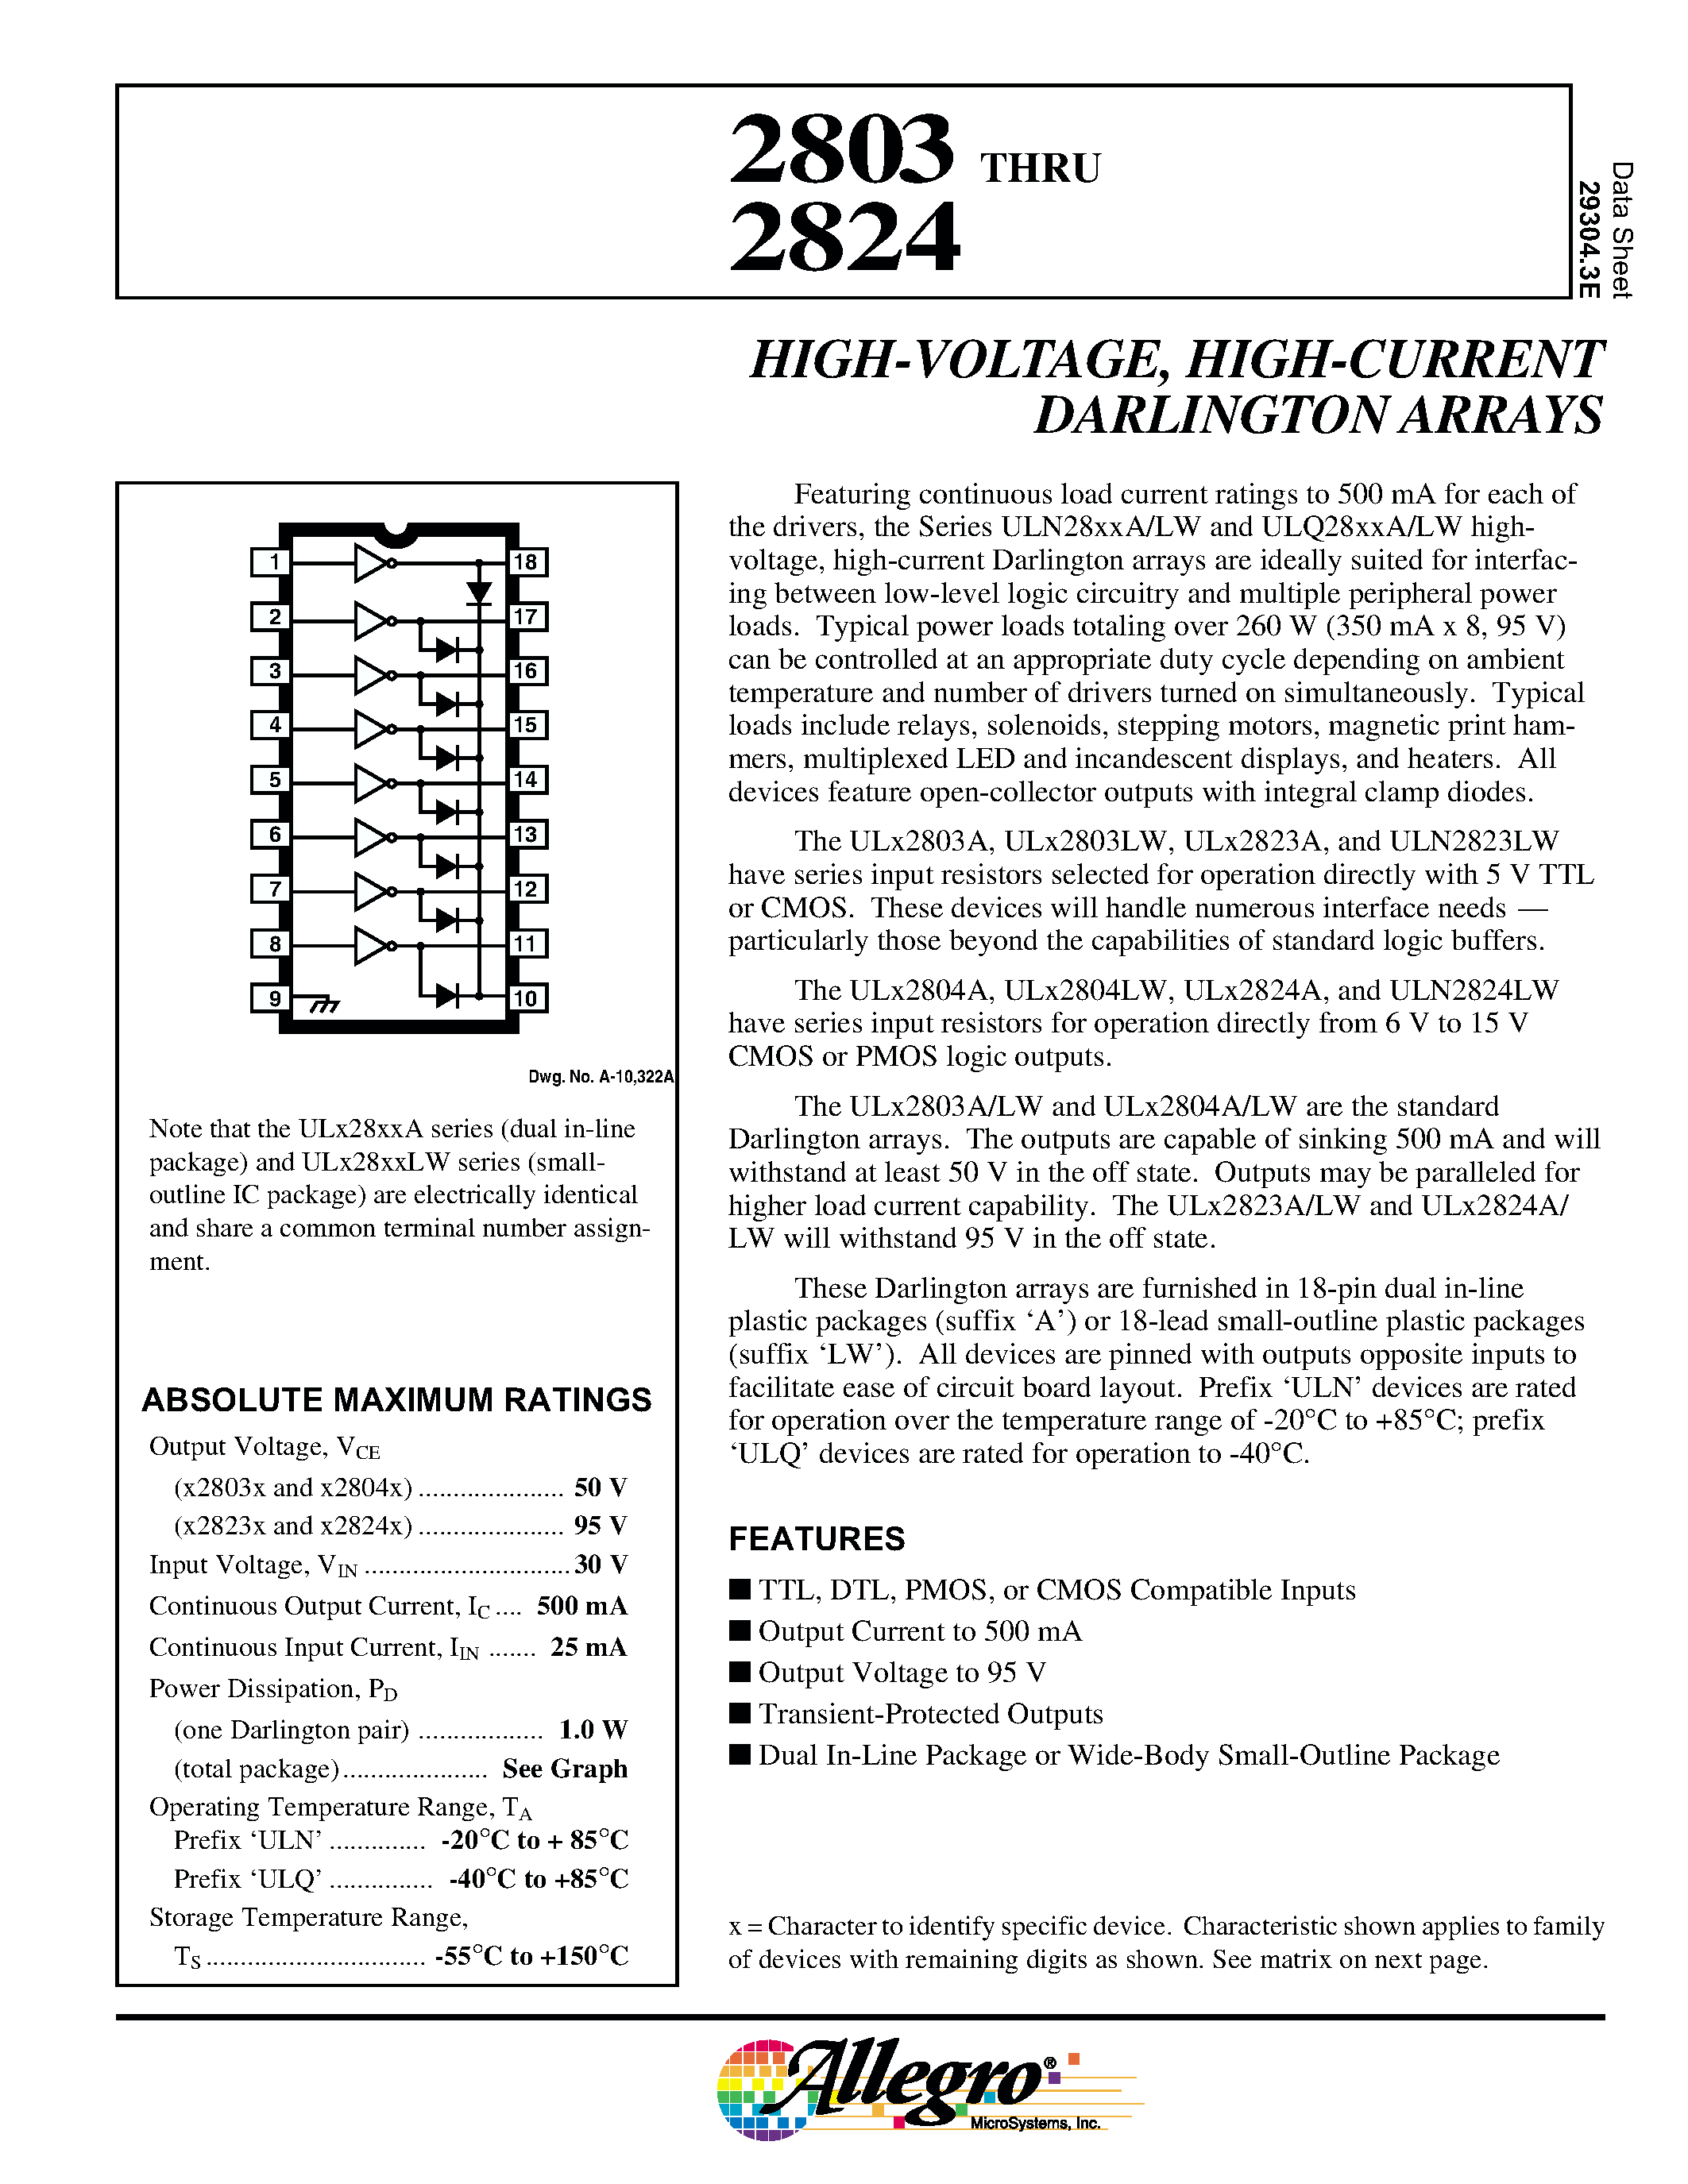 Datasheet ULN2824LW - HIGH-VOLTAGE/ HIGH-CURRENT DARLINGTON ARRAYS page 1